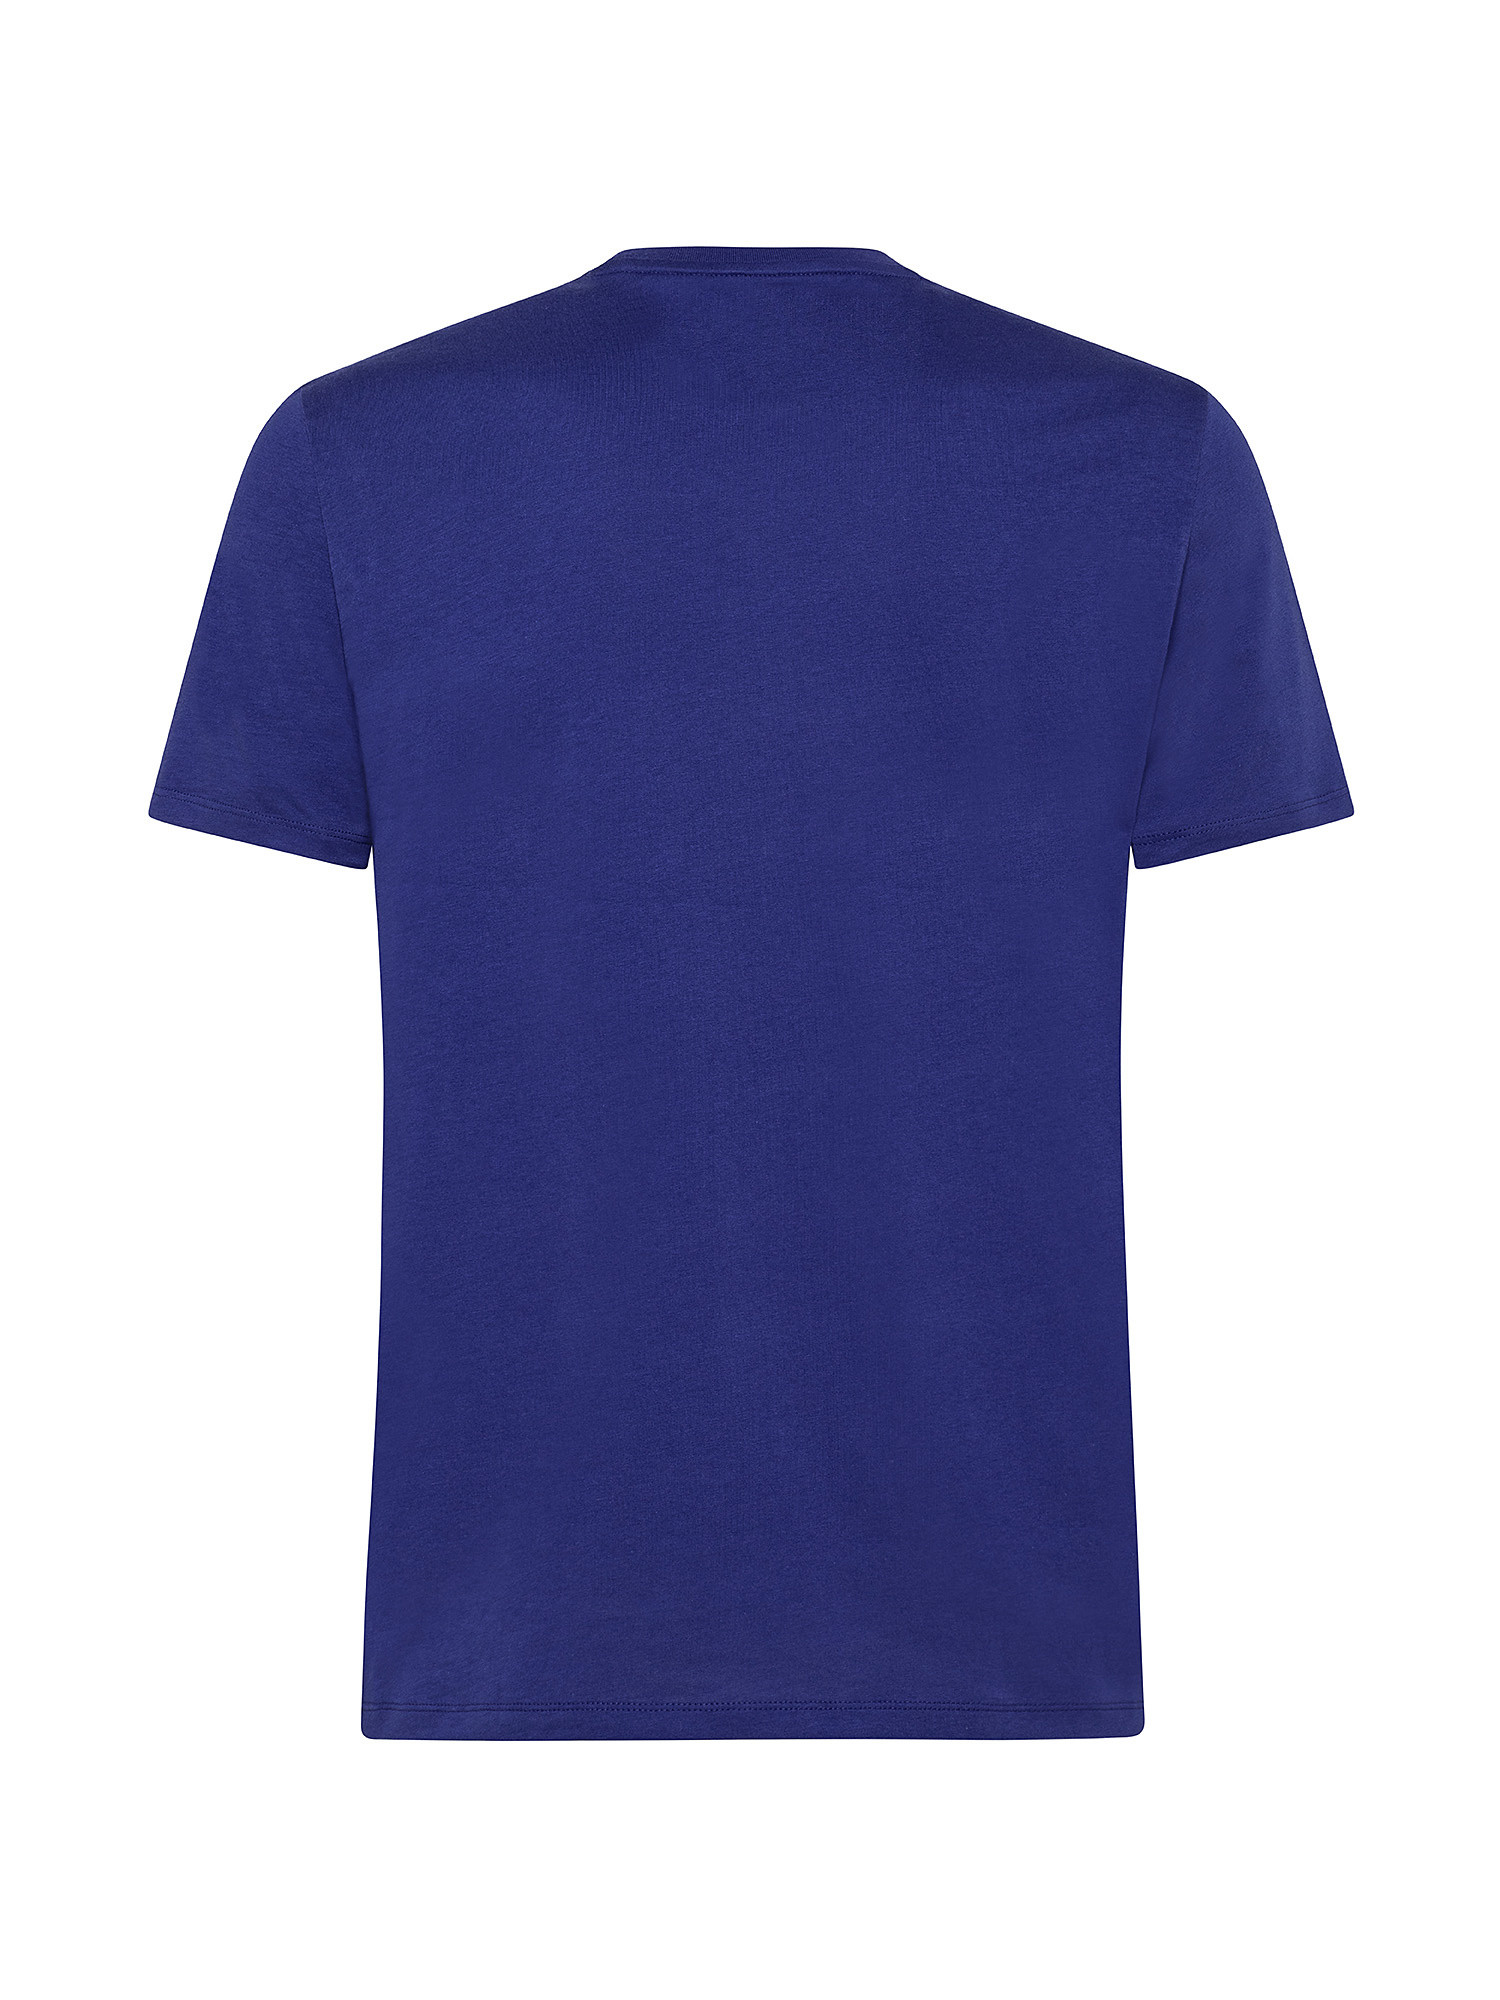 T-shirt, Blu scuro, large